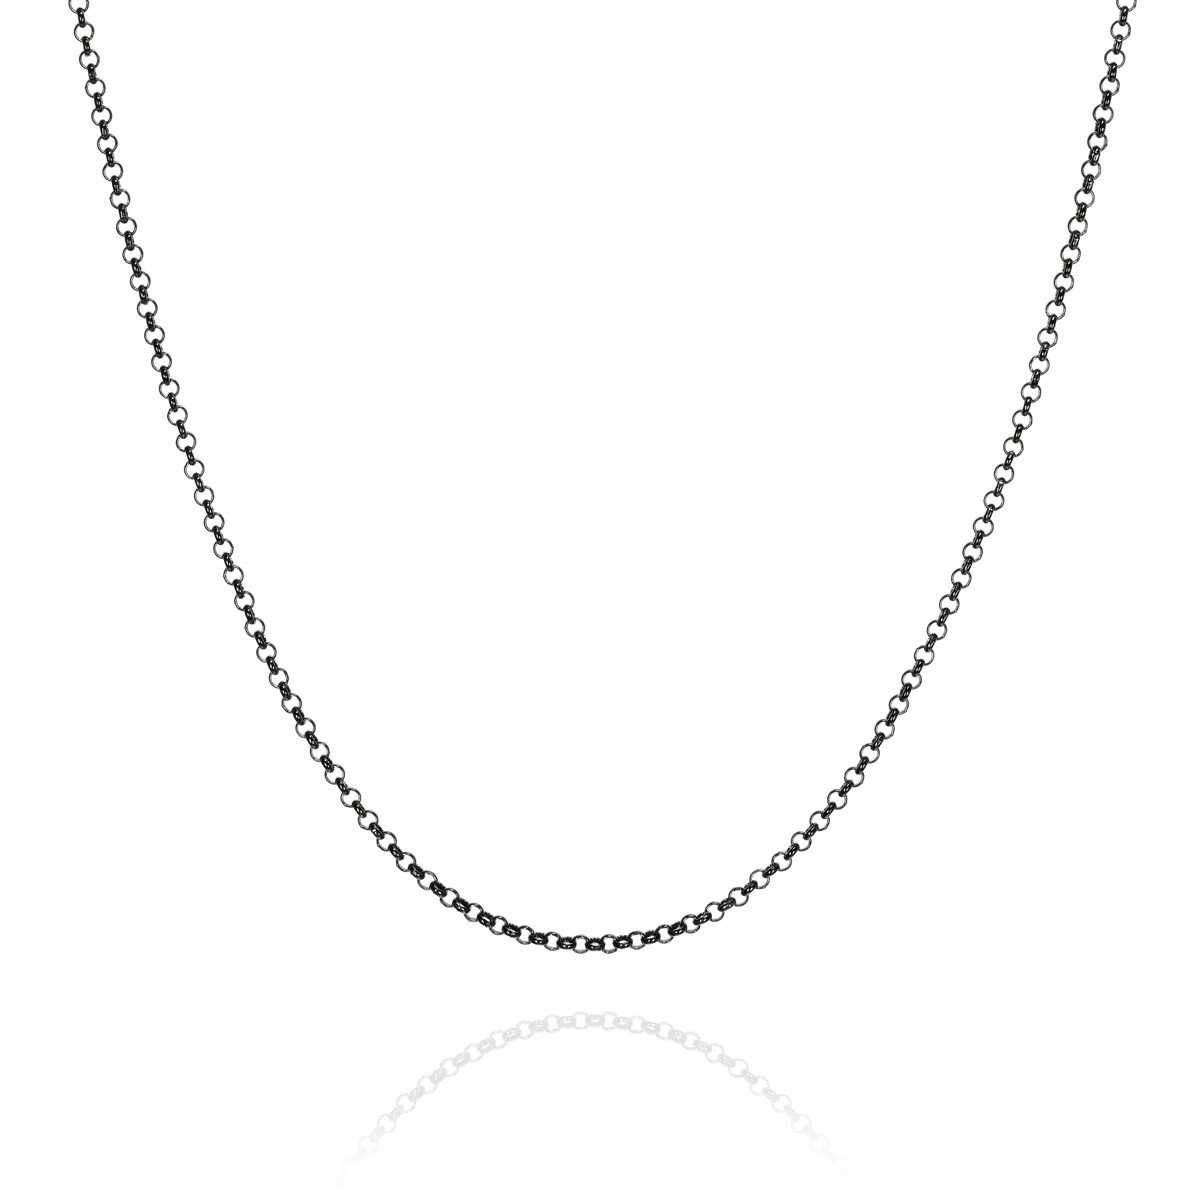 Chain in Silver 45 cm. Black Ruthenium